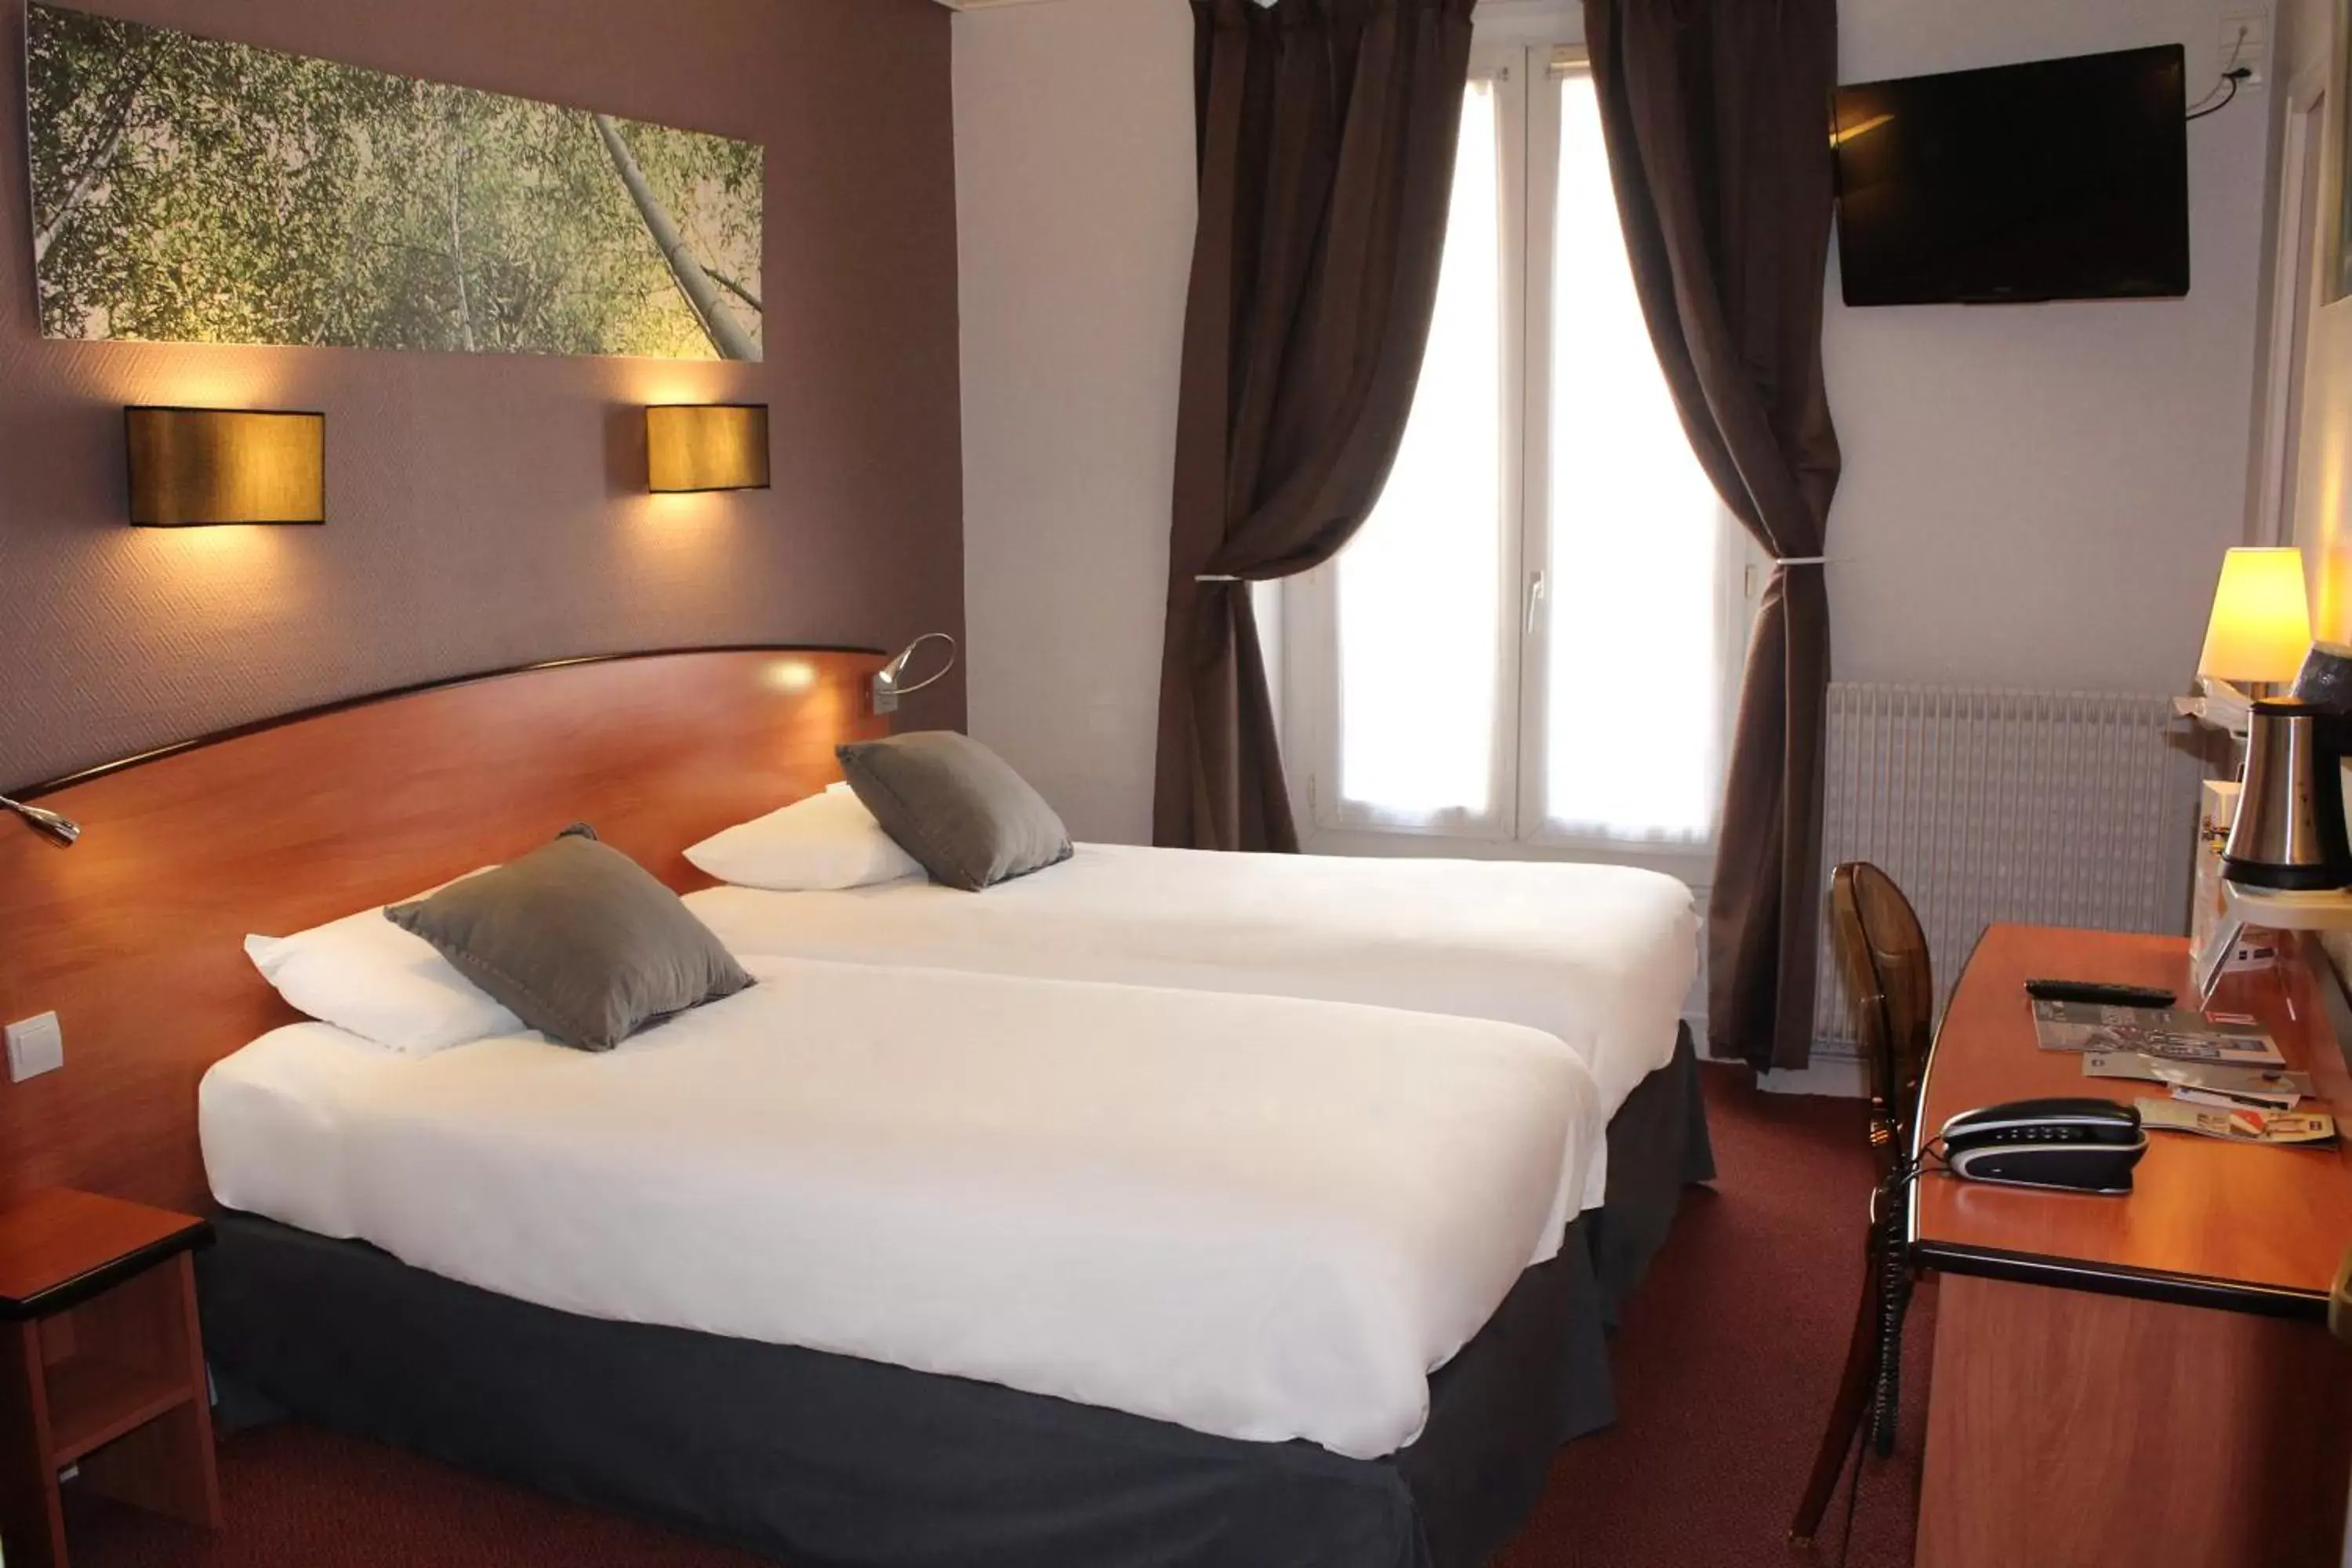 Bed in Kyriad Hotel XIII Italie Gobelins